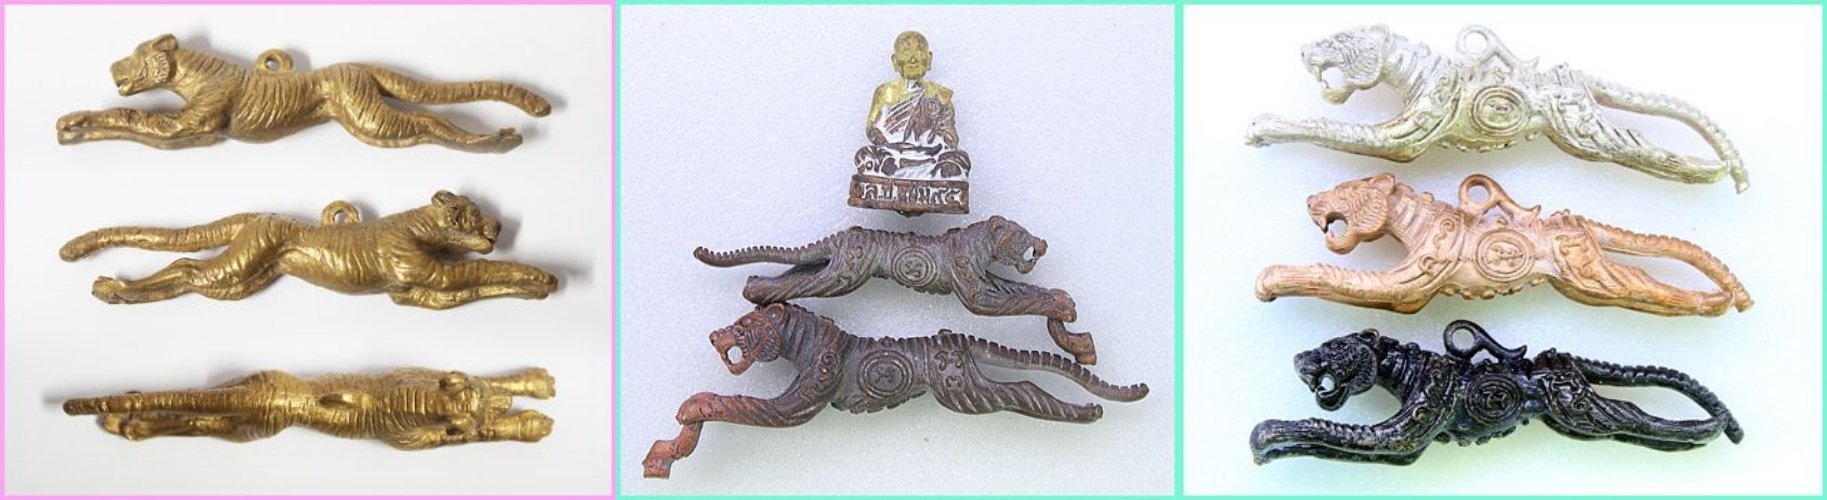 tiger amulets